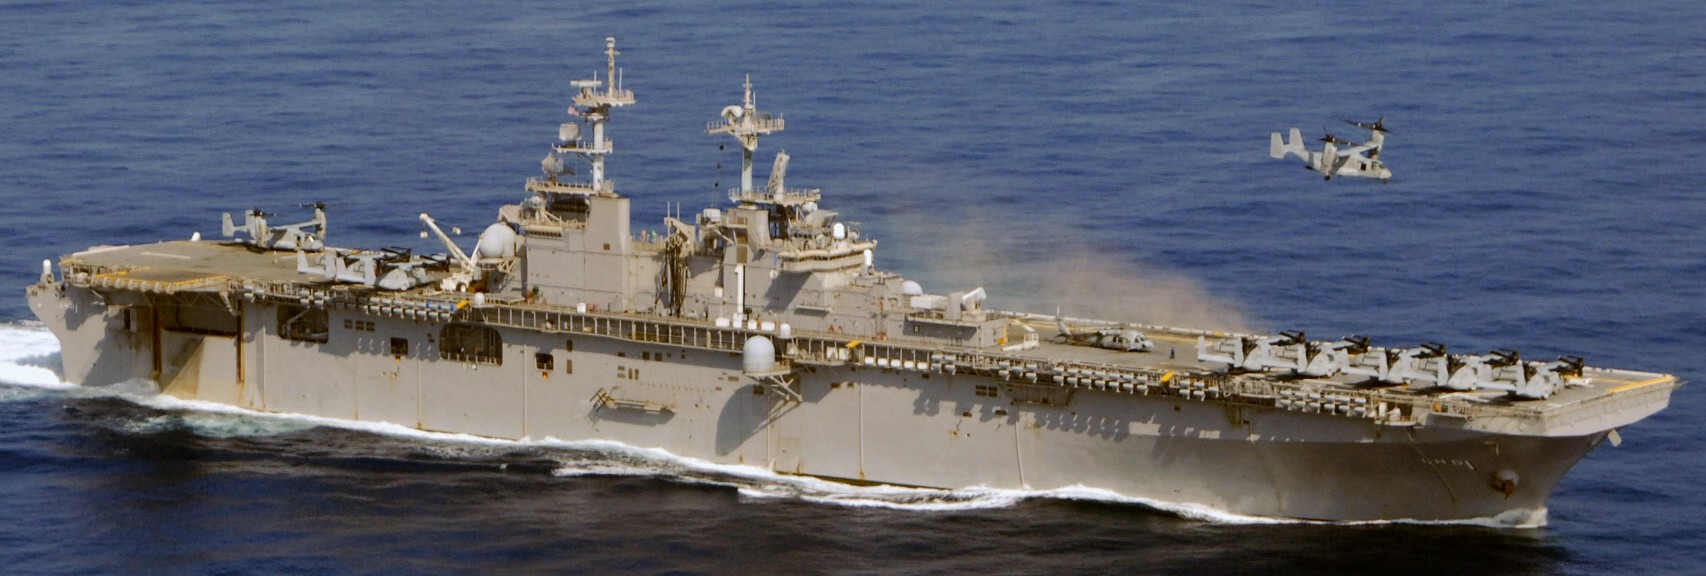 lhd-1 uss wasp amphibious assault landing ship dock helicopter us navy mediterranean sea 110